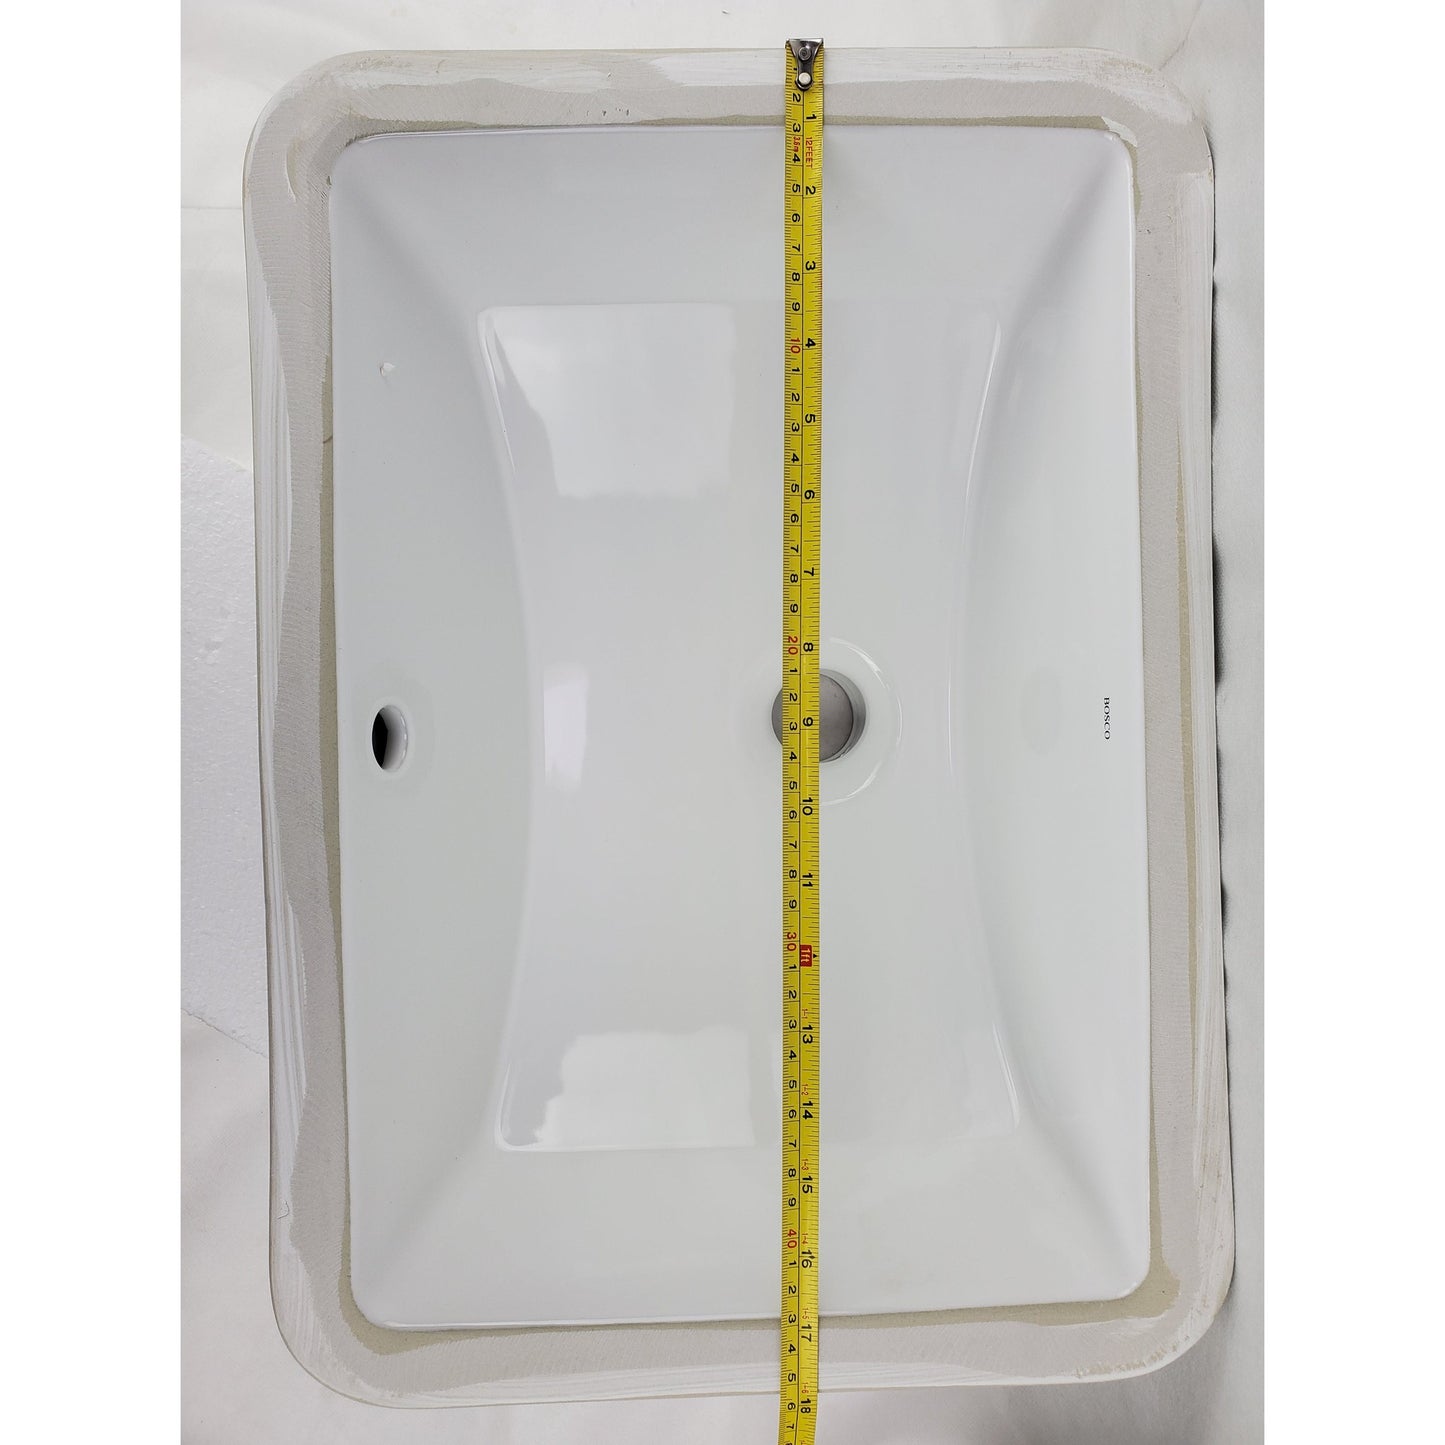 American Imaginations AI-31765 Rectangle White Ceramic Bathroom Undermount Sink with Enamel Glaze Finish